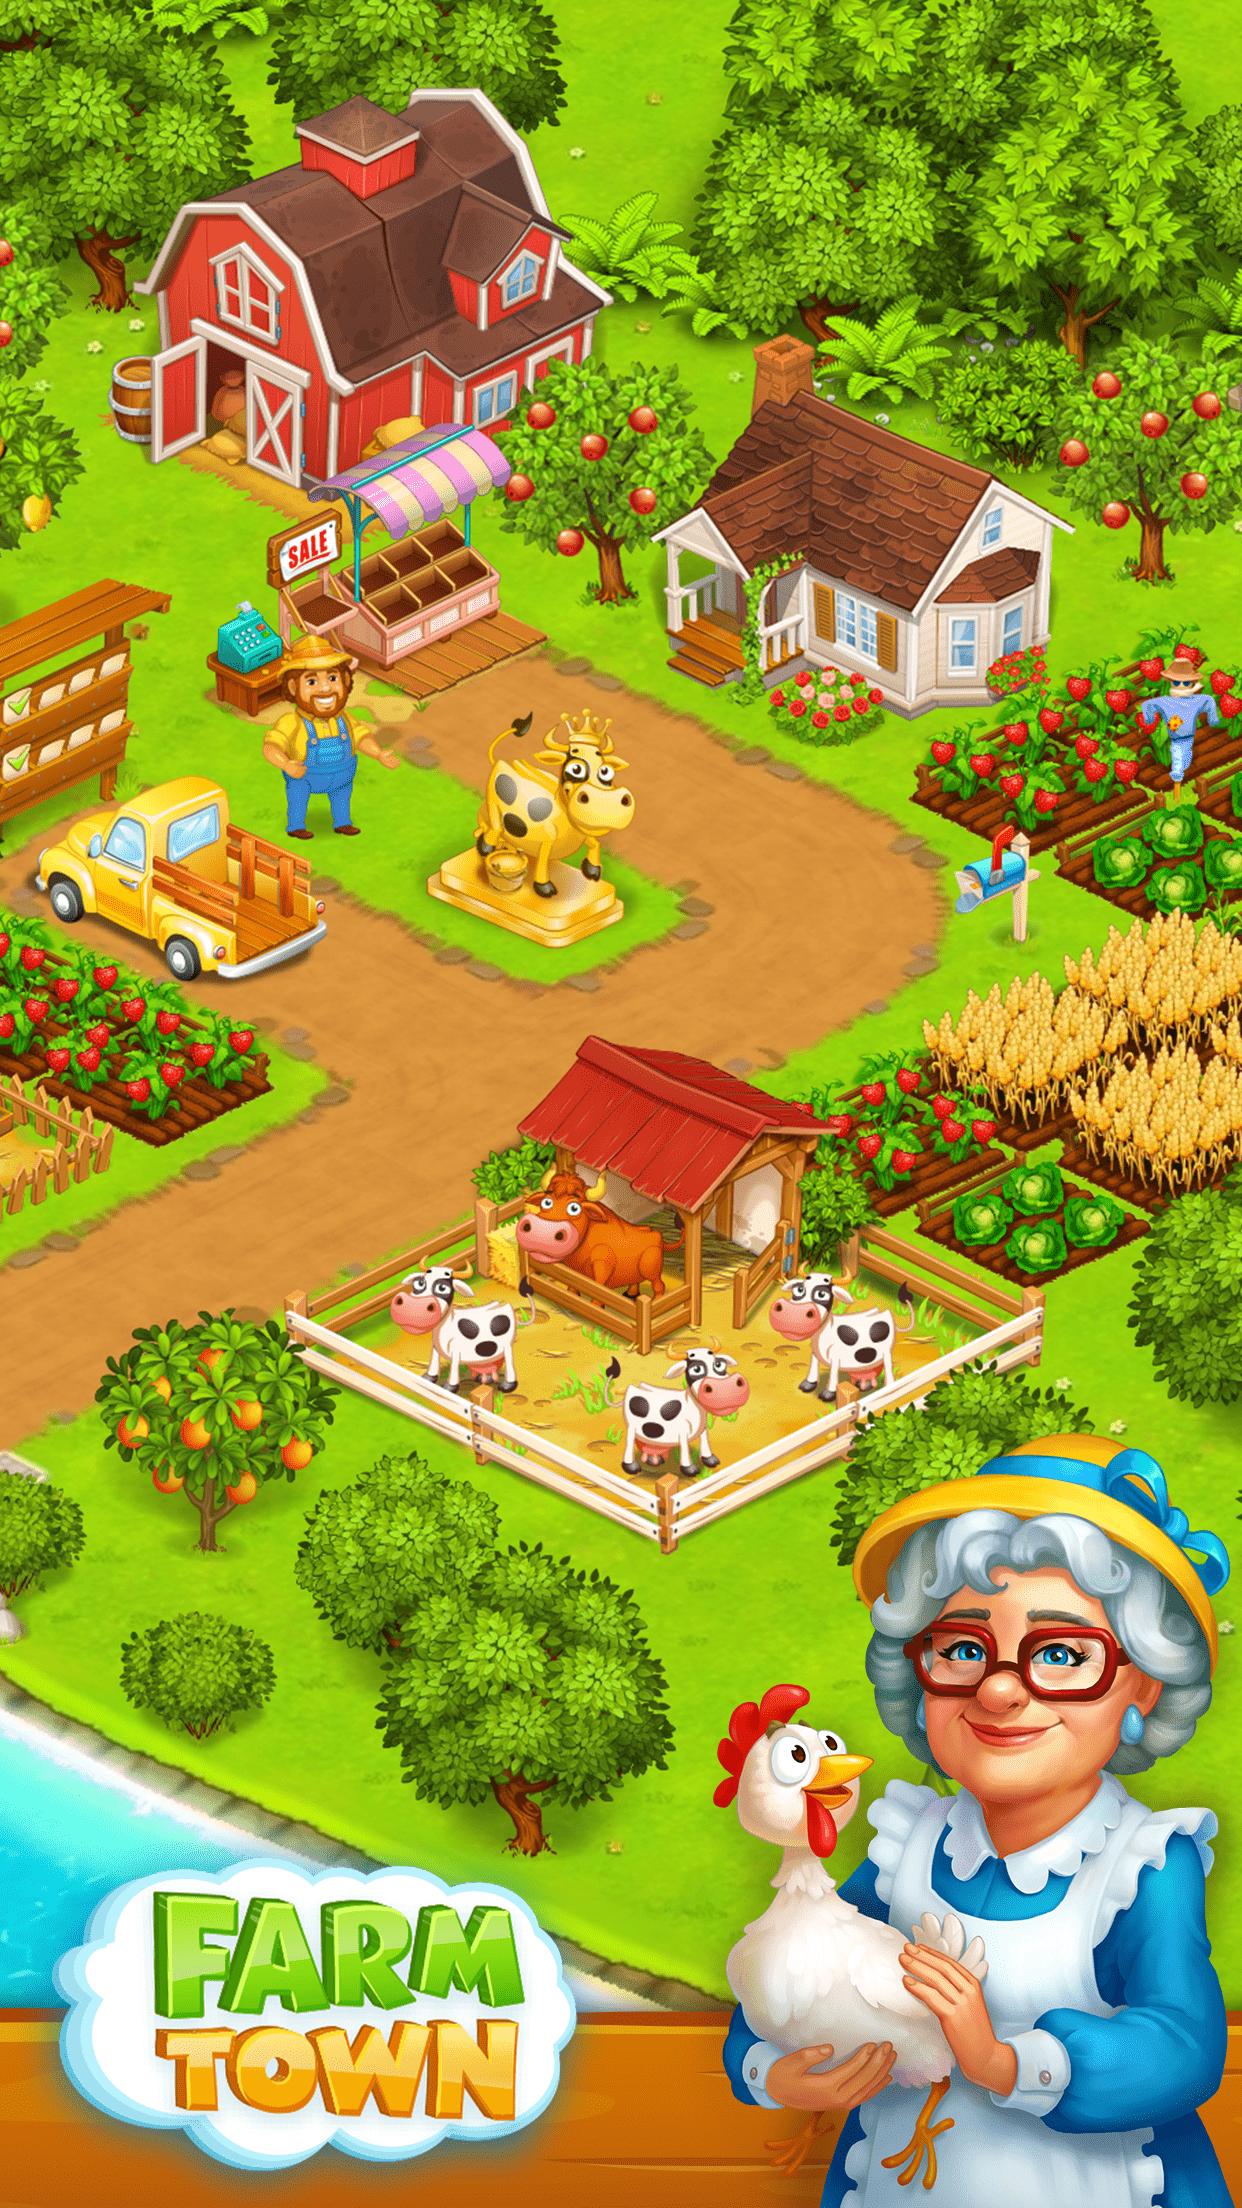 Farm Town: Happy village near small city and town 3.41 Screenshot 11